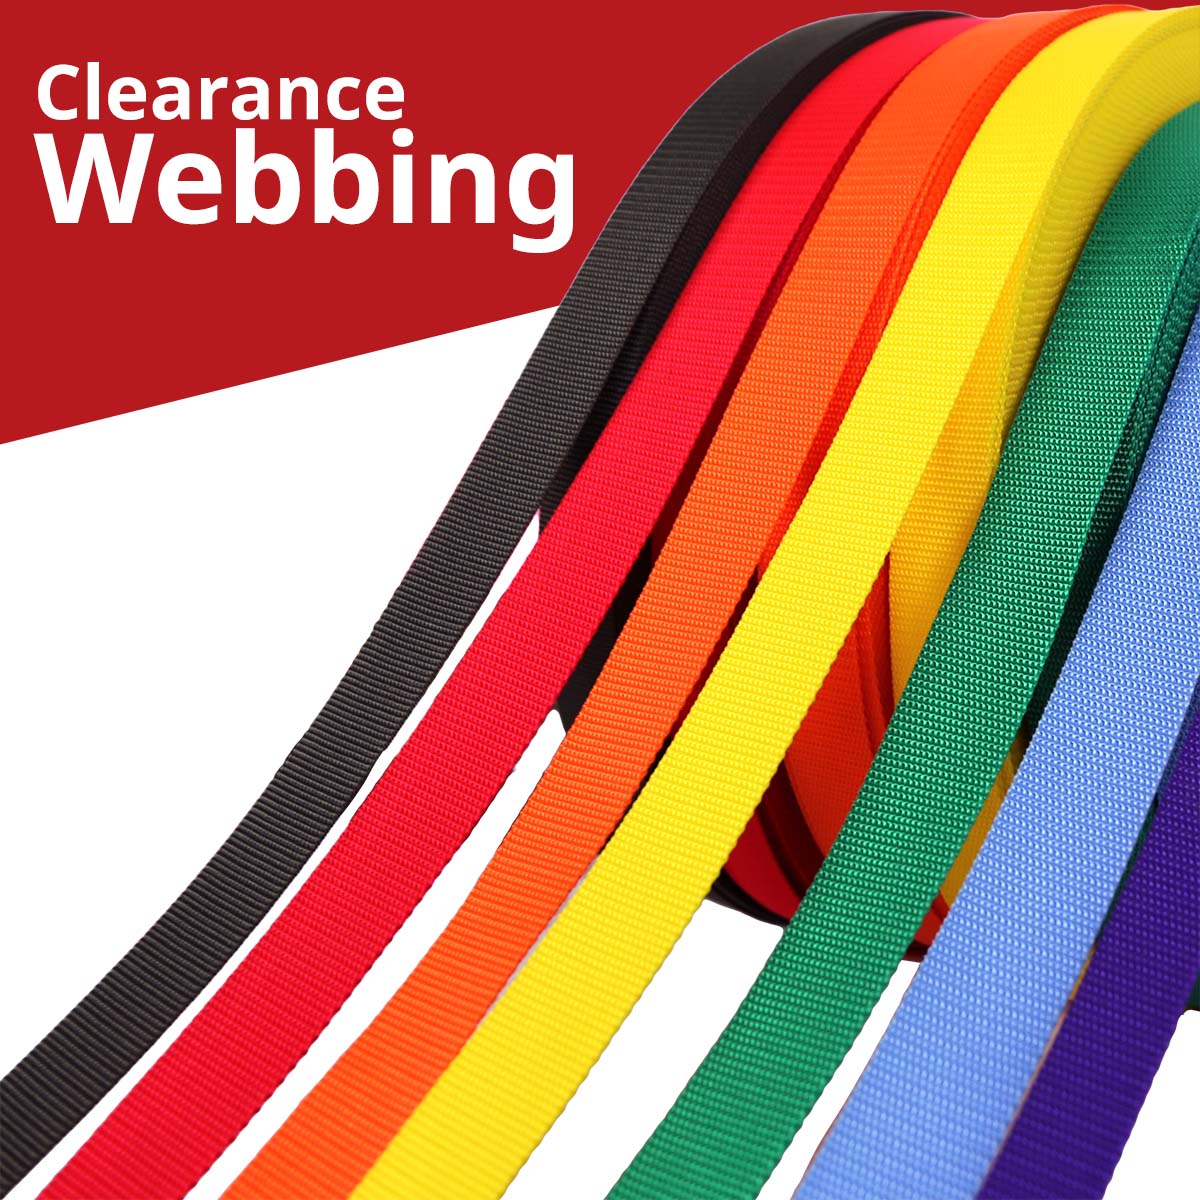 Clearance Webbing